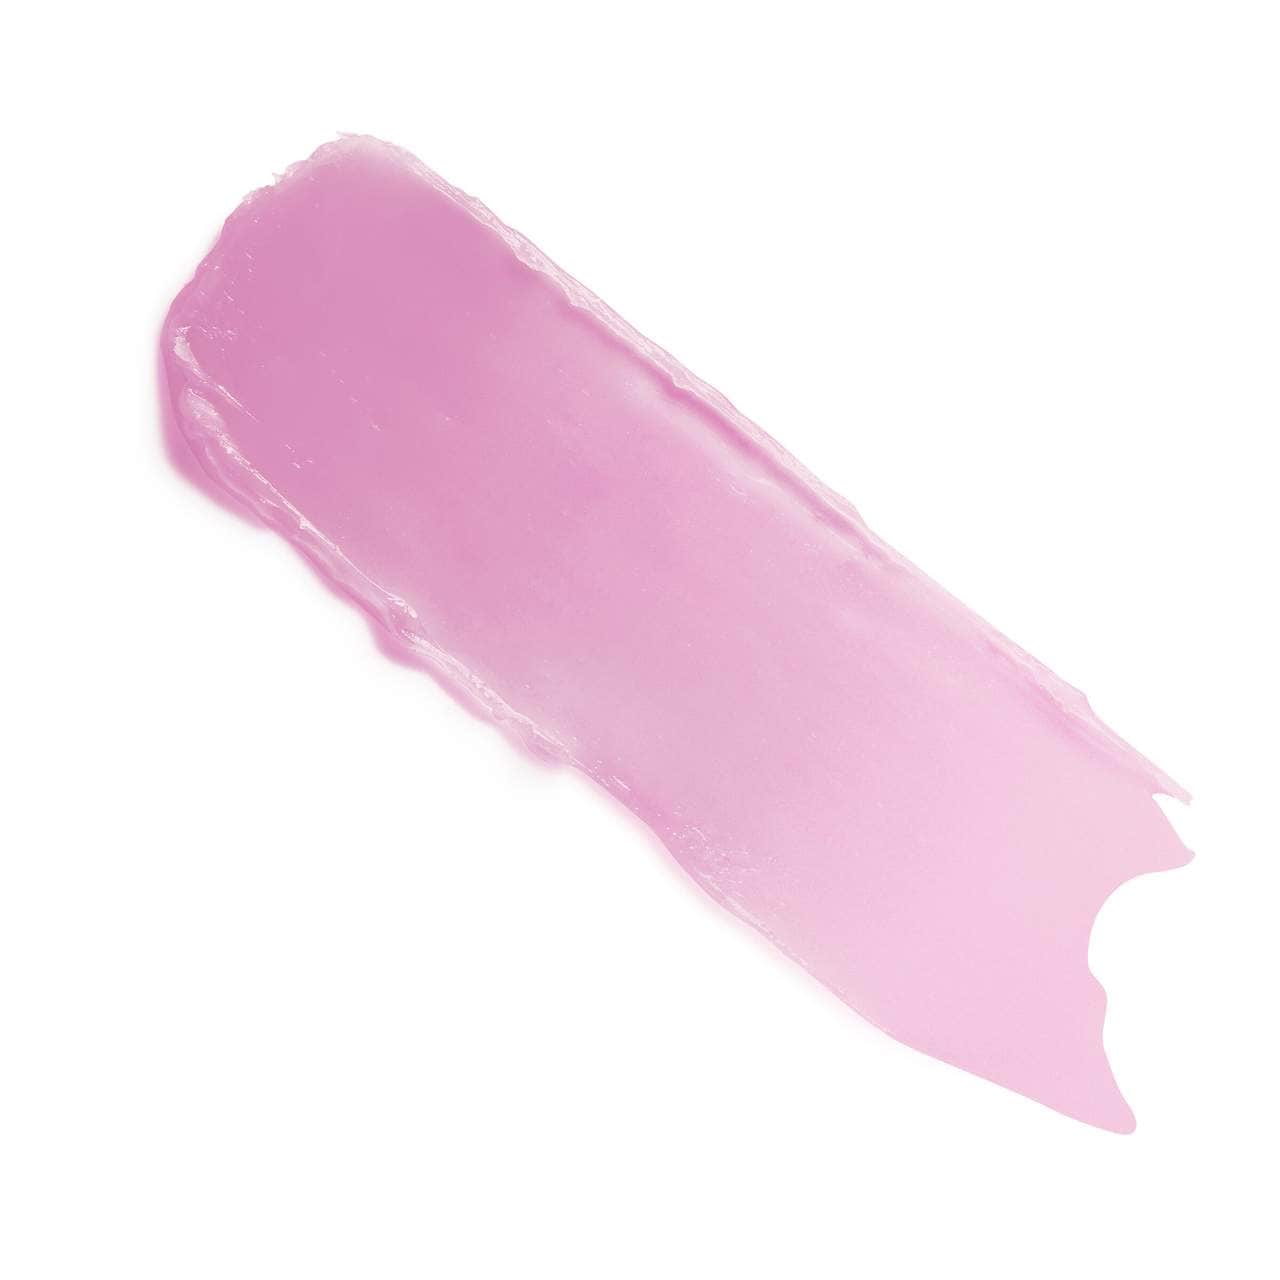 Dior Addict Lip Glow in Pink Lilac